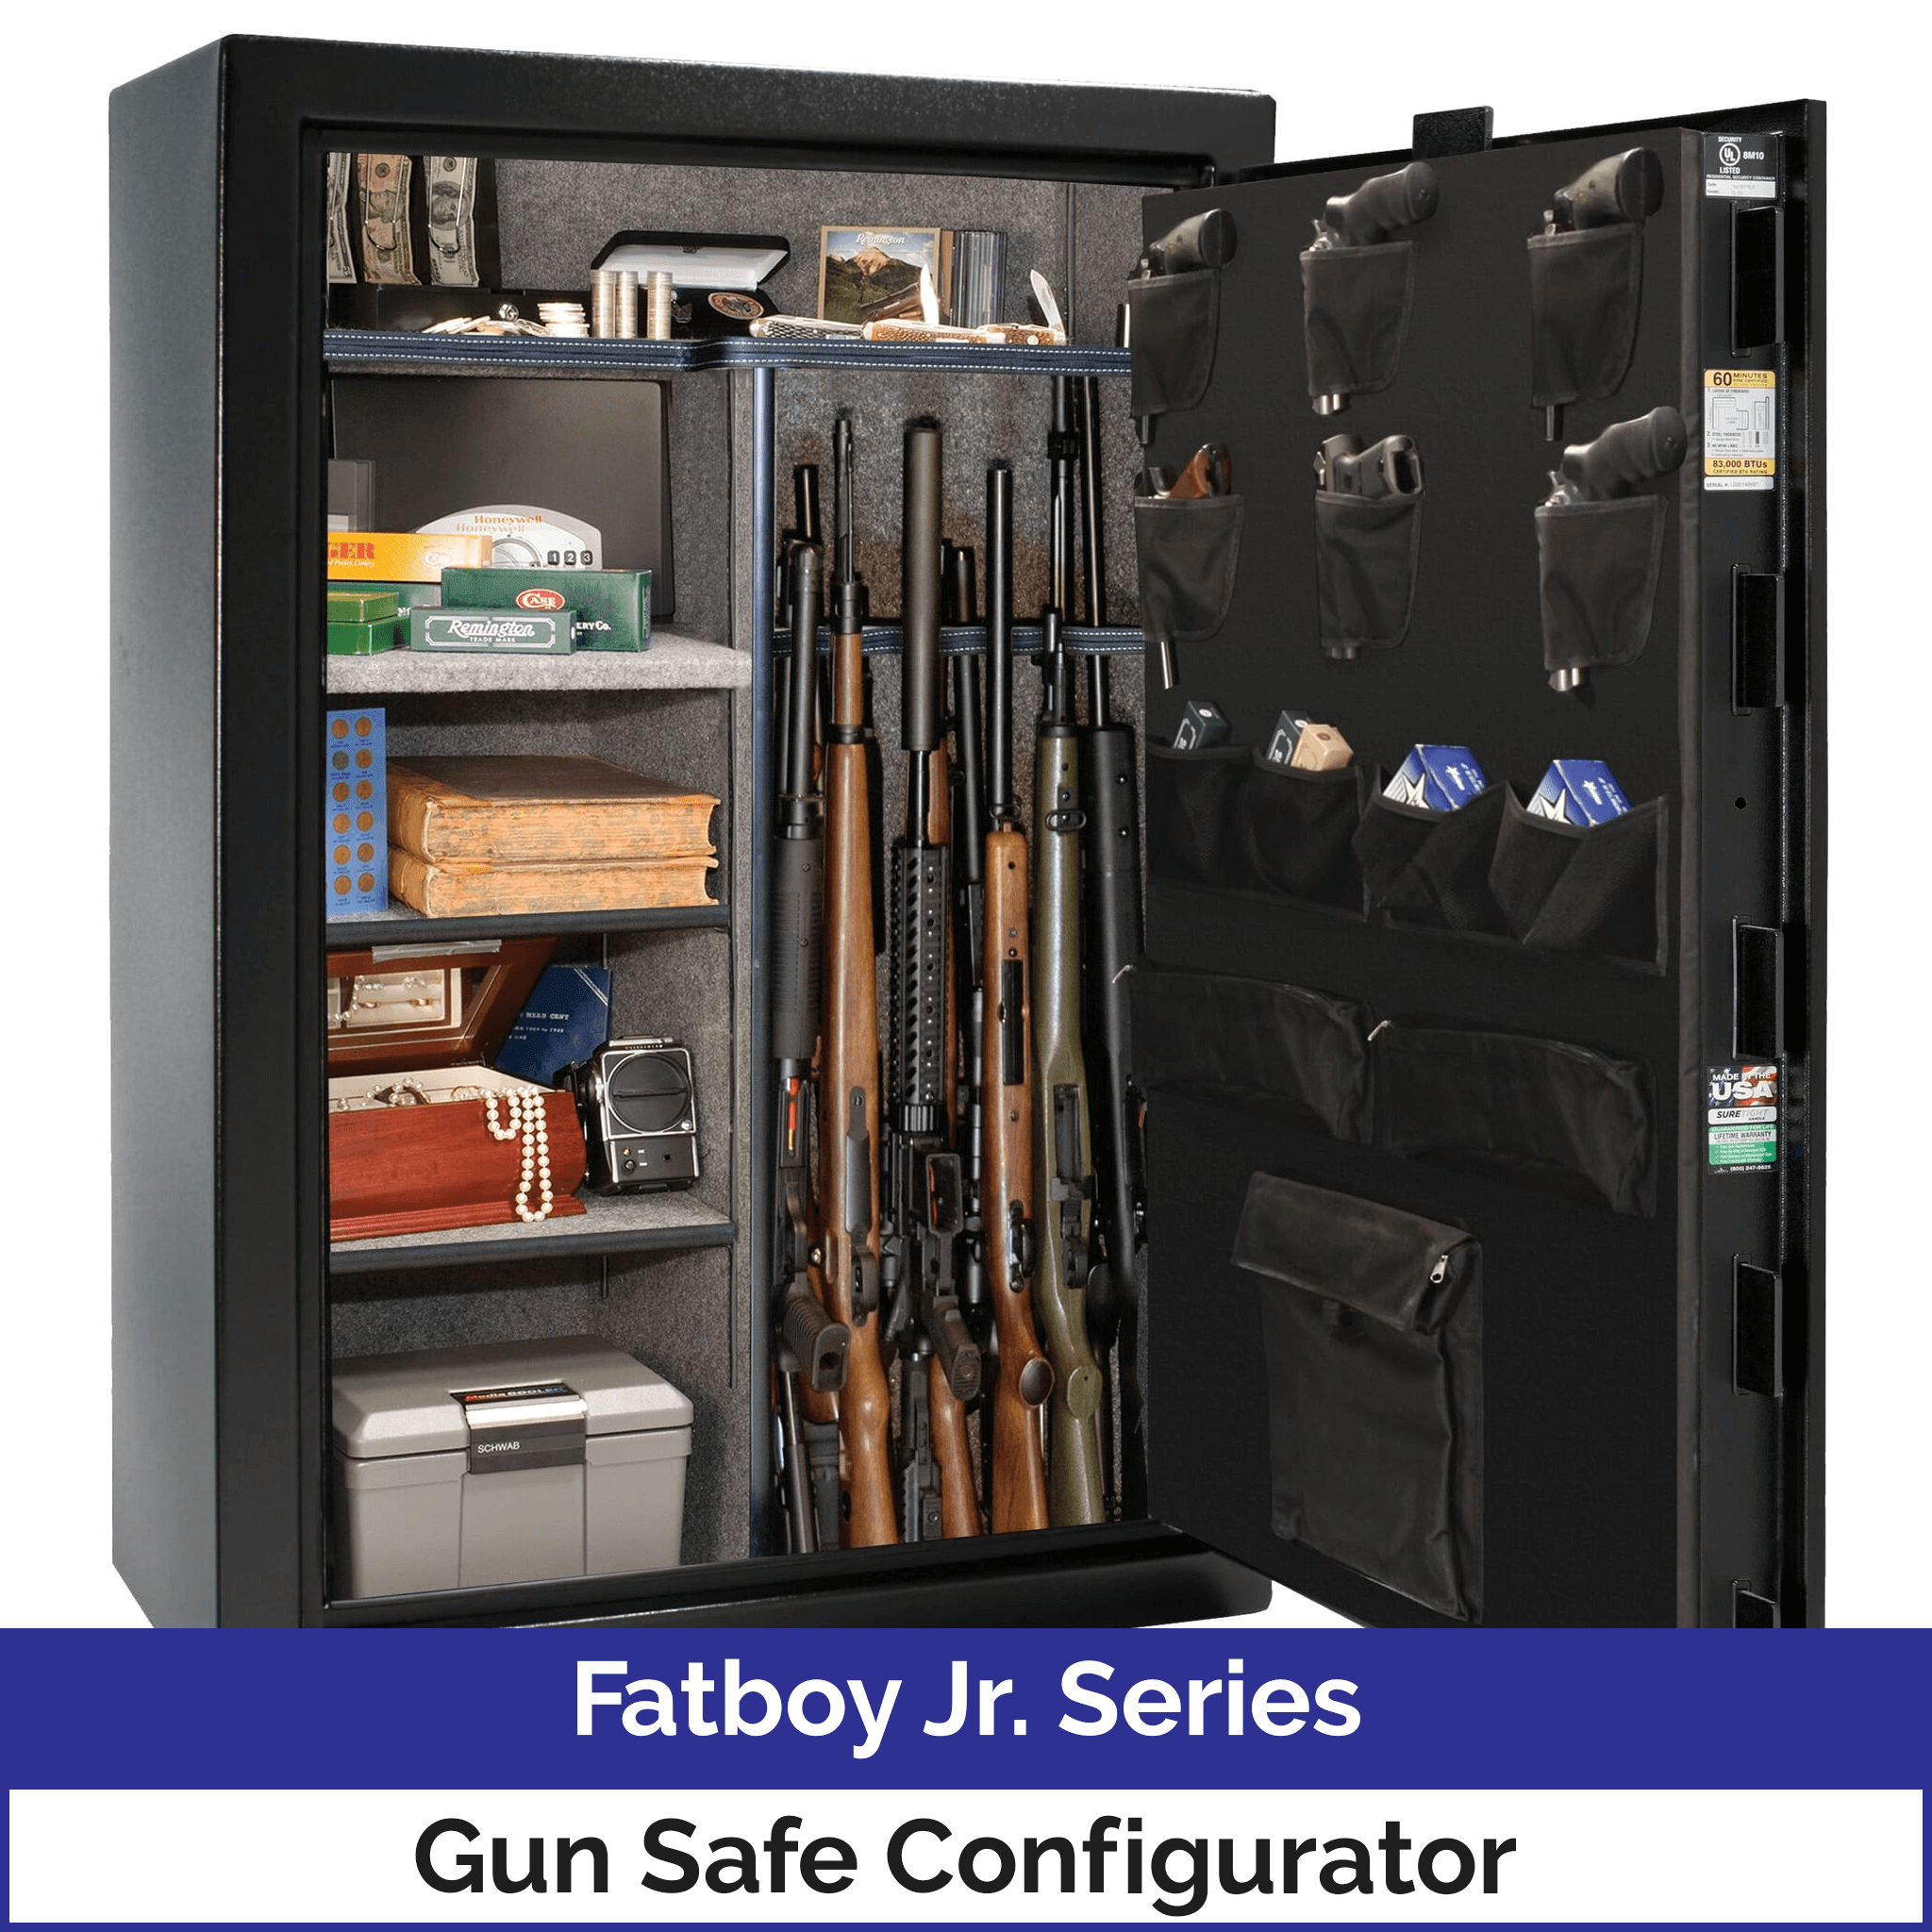 Liberty Fatboy Jr. Series Gun Safe Configurator, photo 4